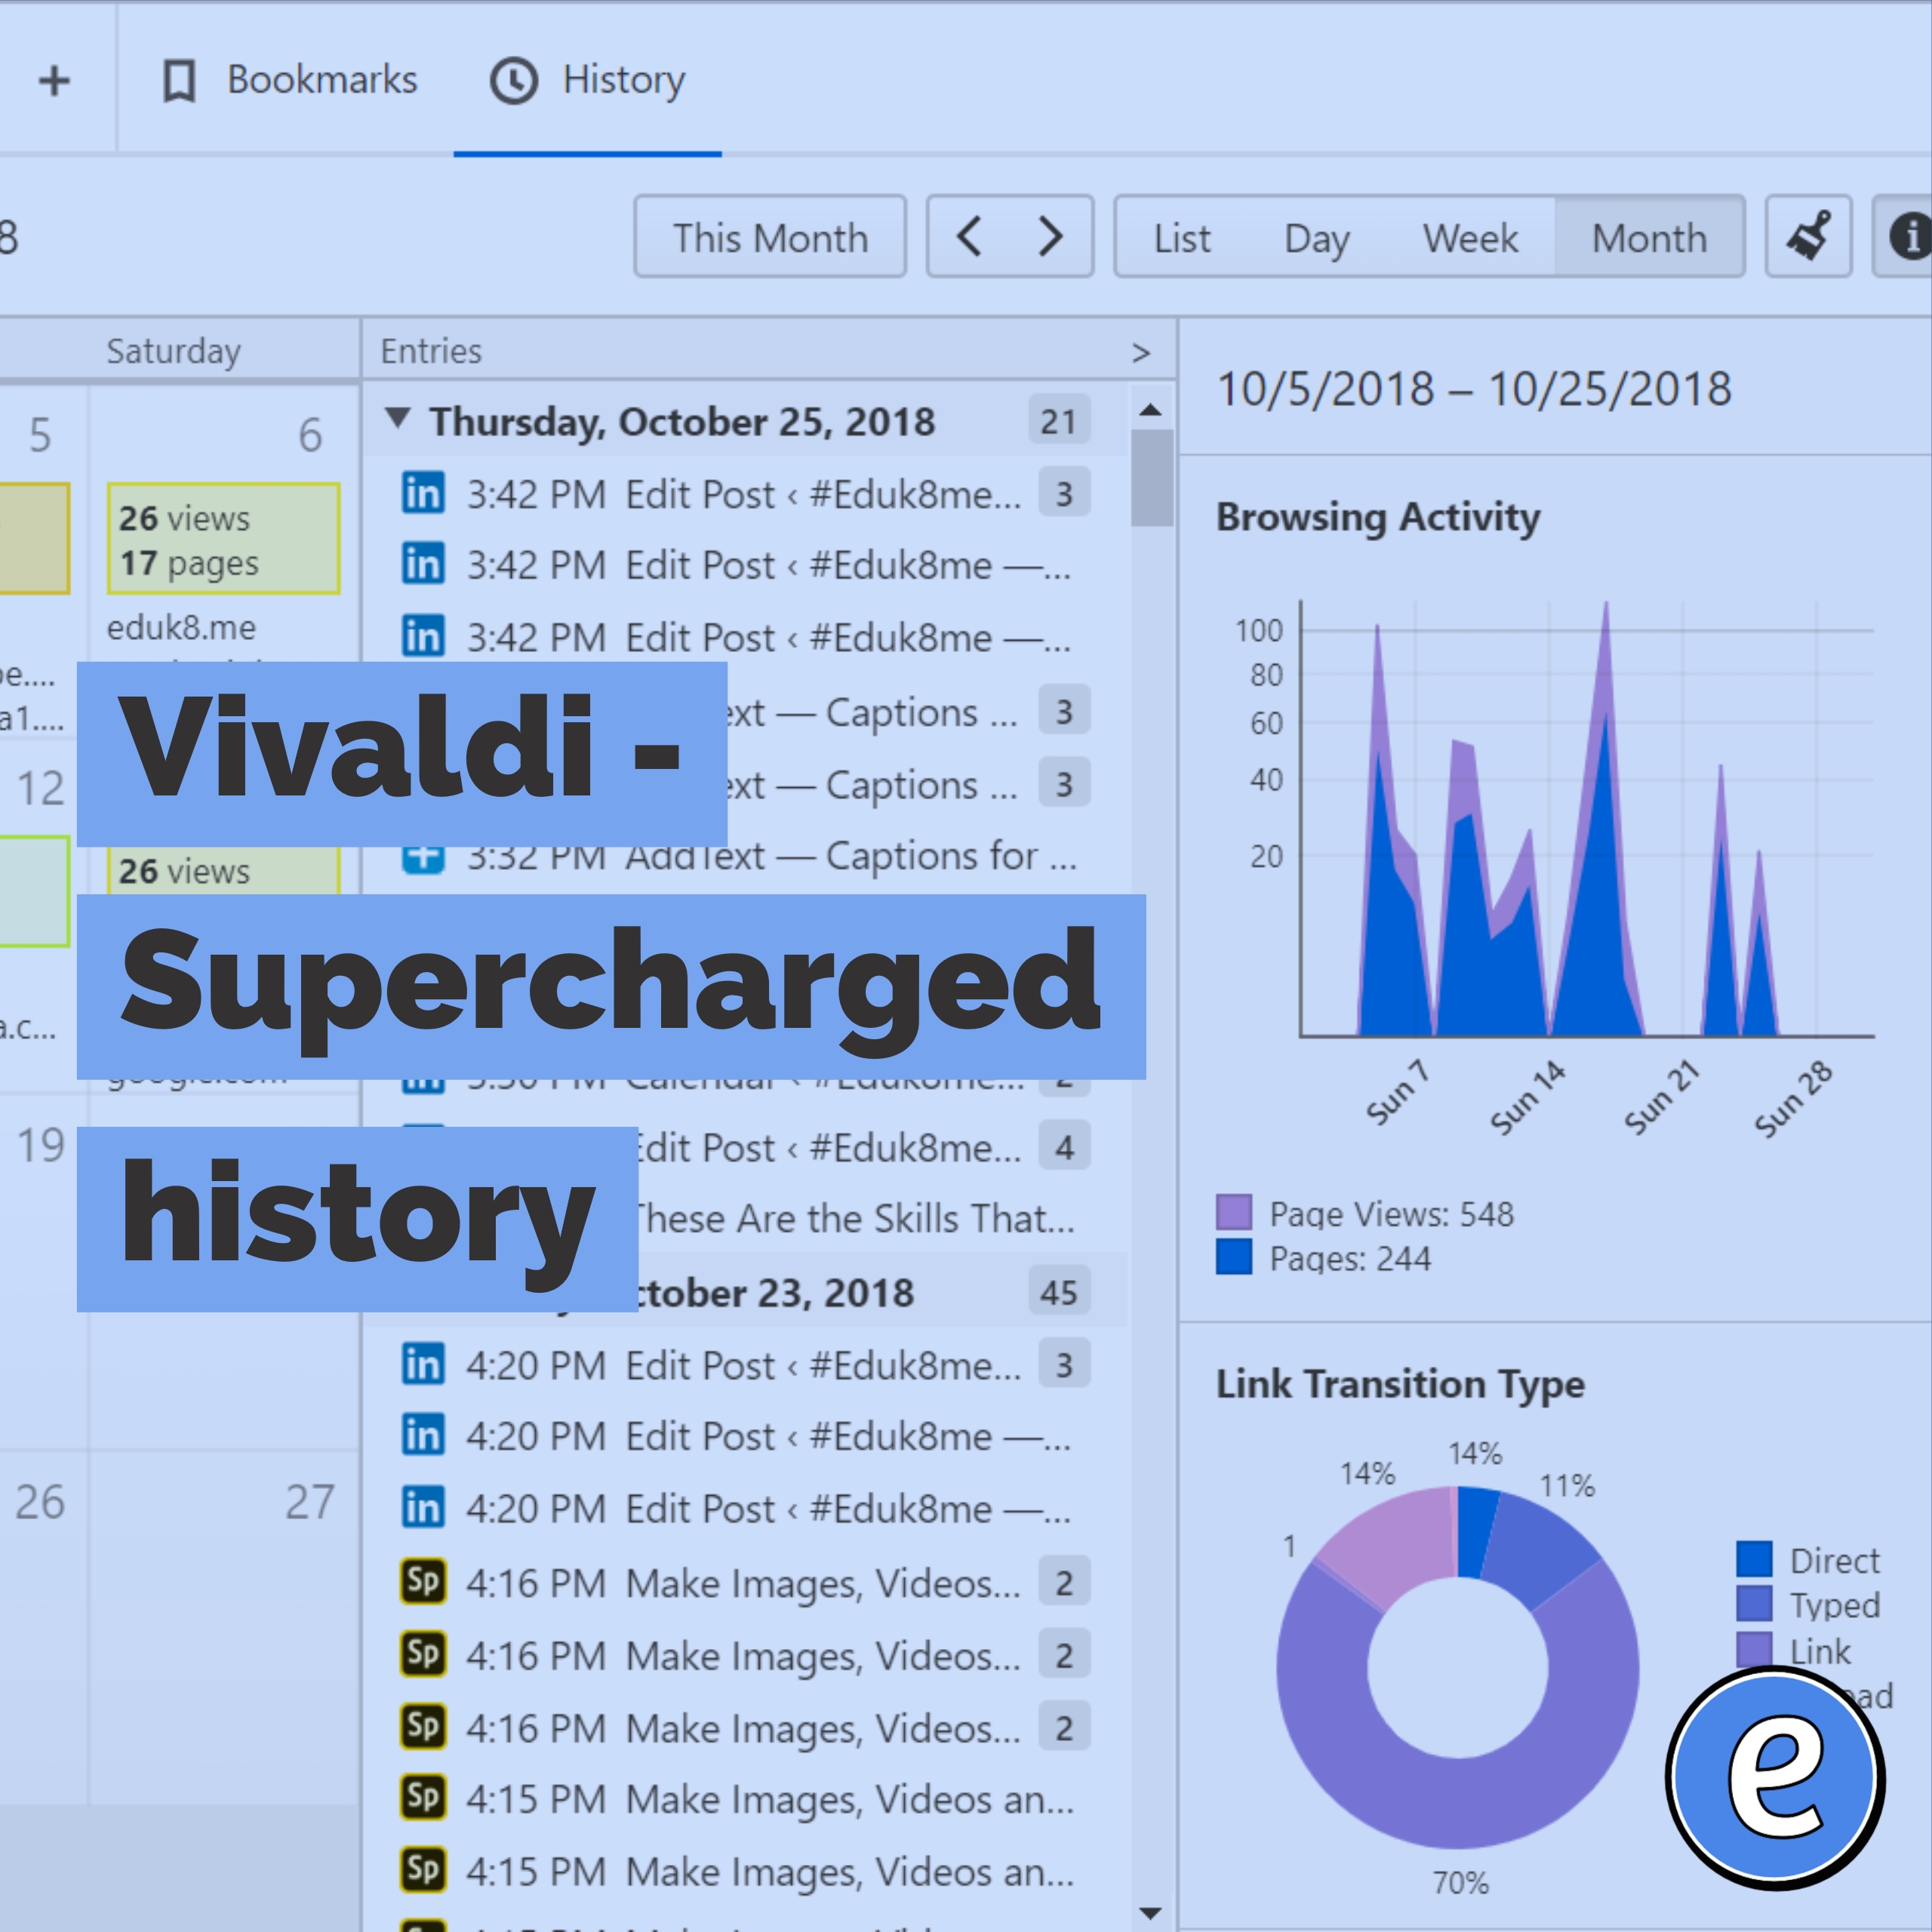 Vivaldi – Supercharged history